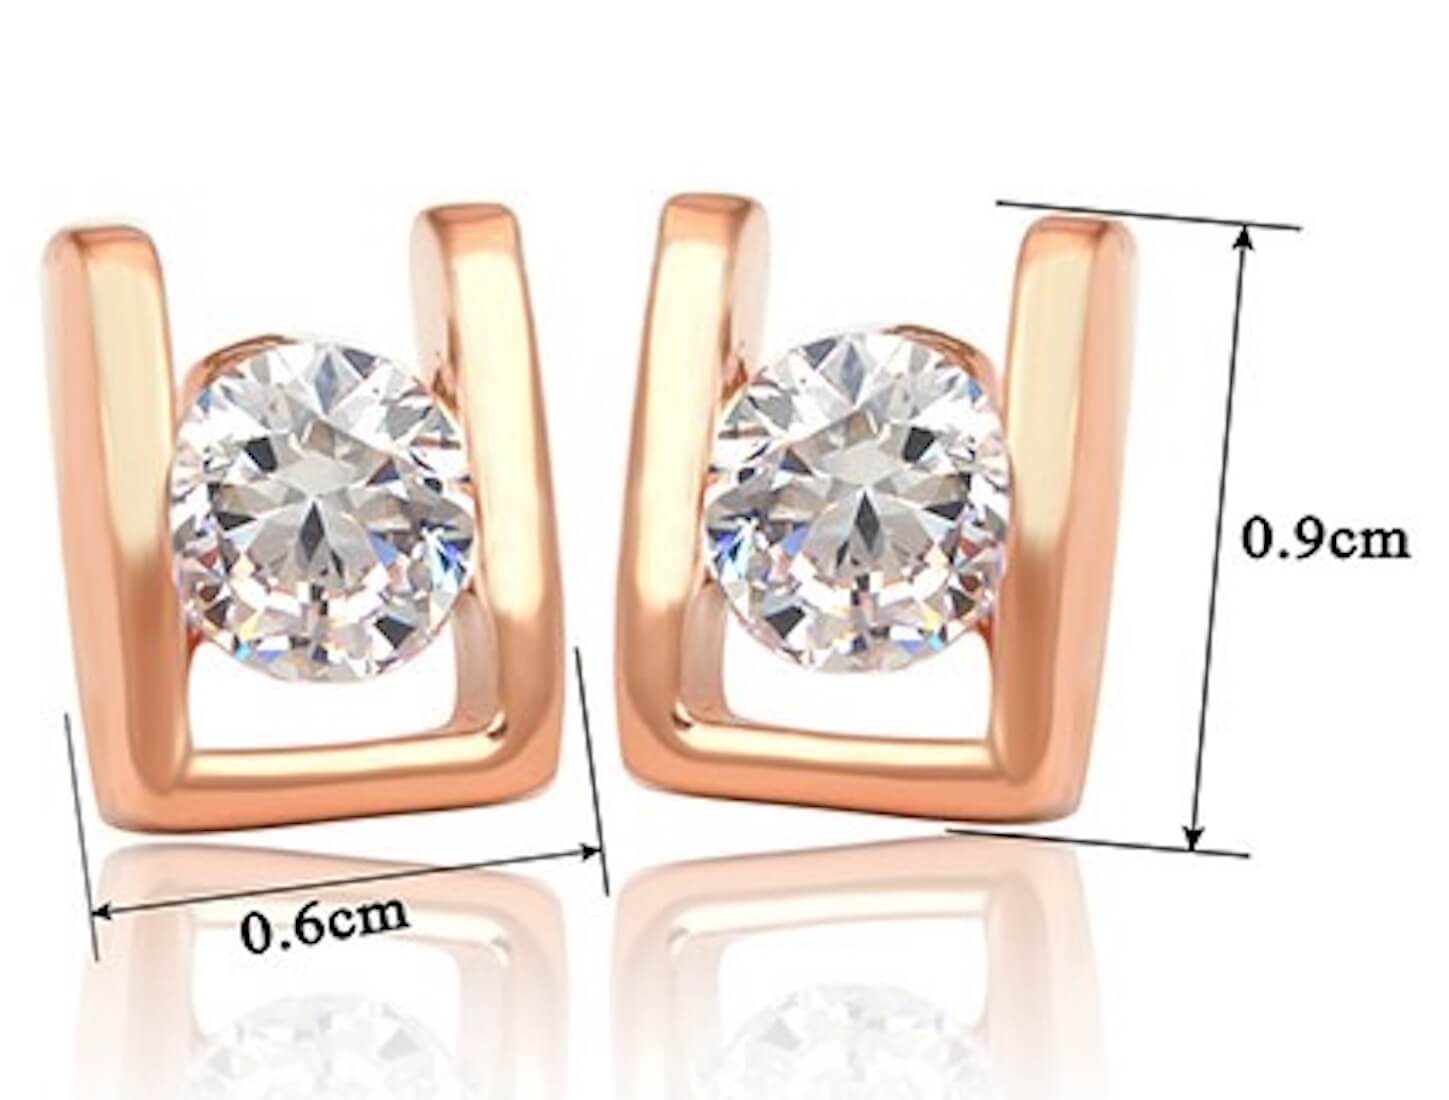 Shop Latest Designs of Diamond Studs Online | Kalyan